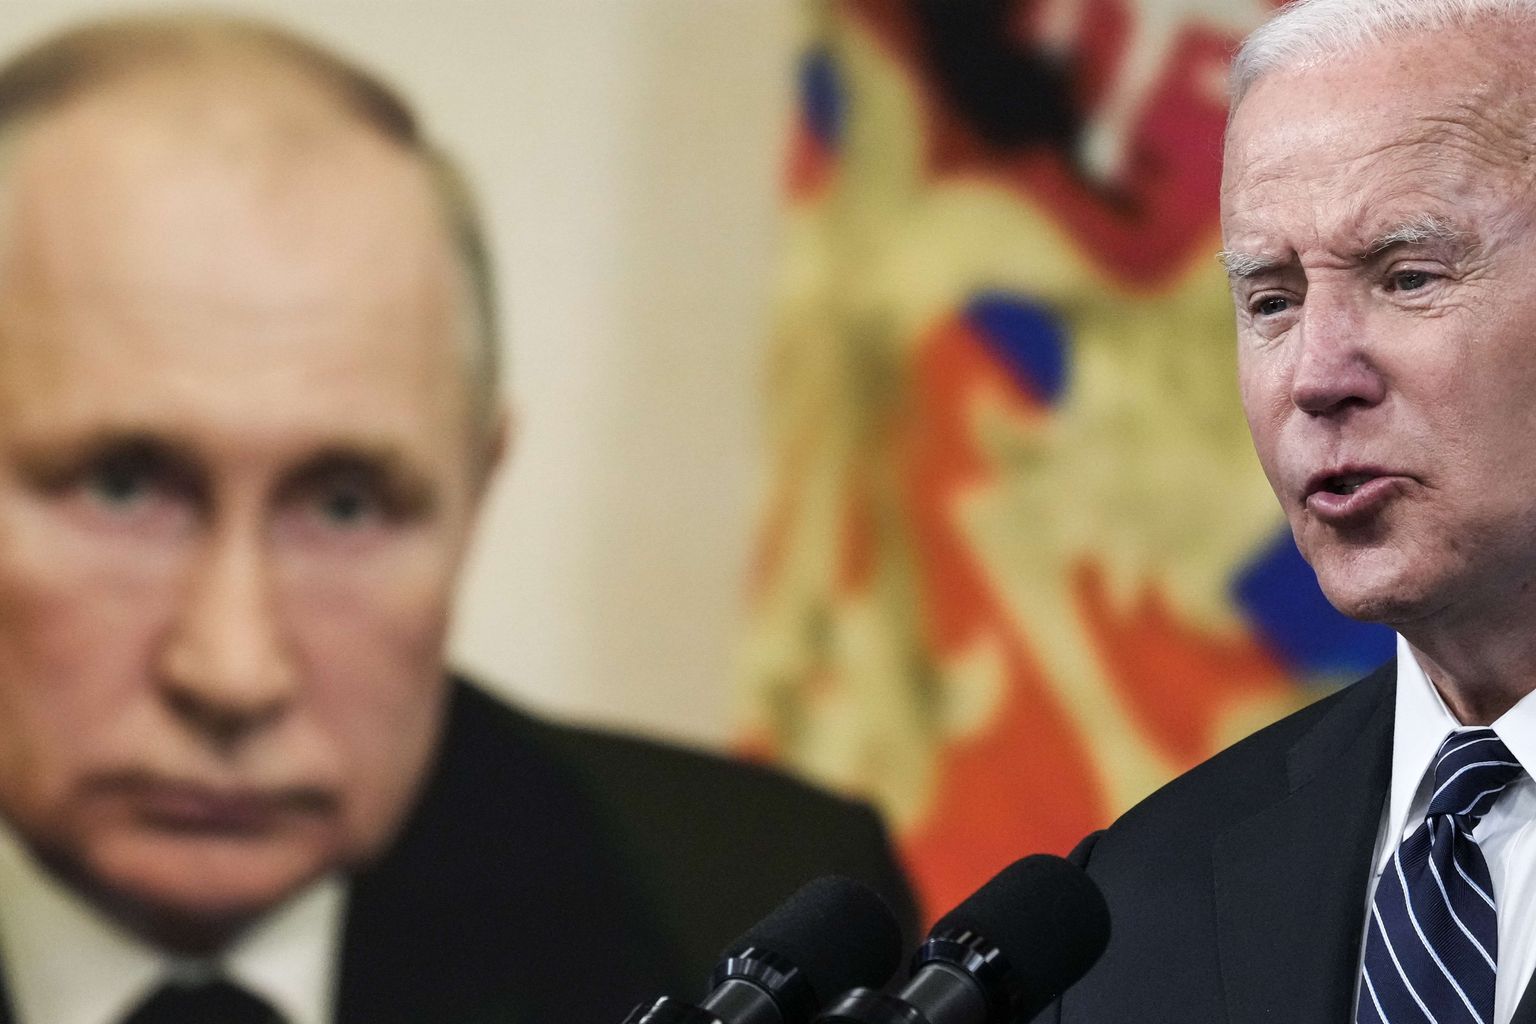 Biden 22. juunil 2022 bensiinihindadest kõnelemas. Taustale on kuvatud Putin.